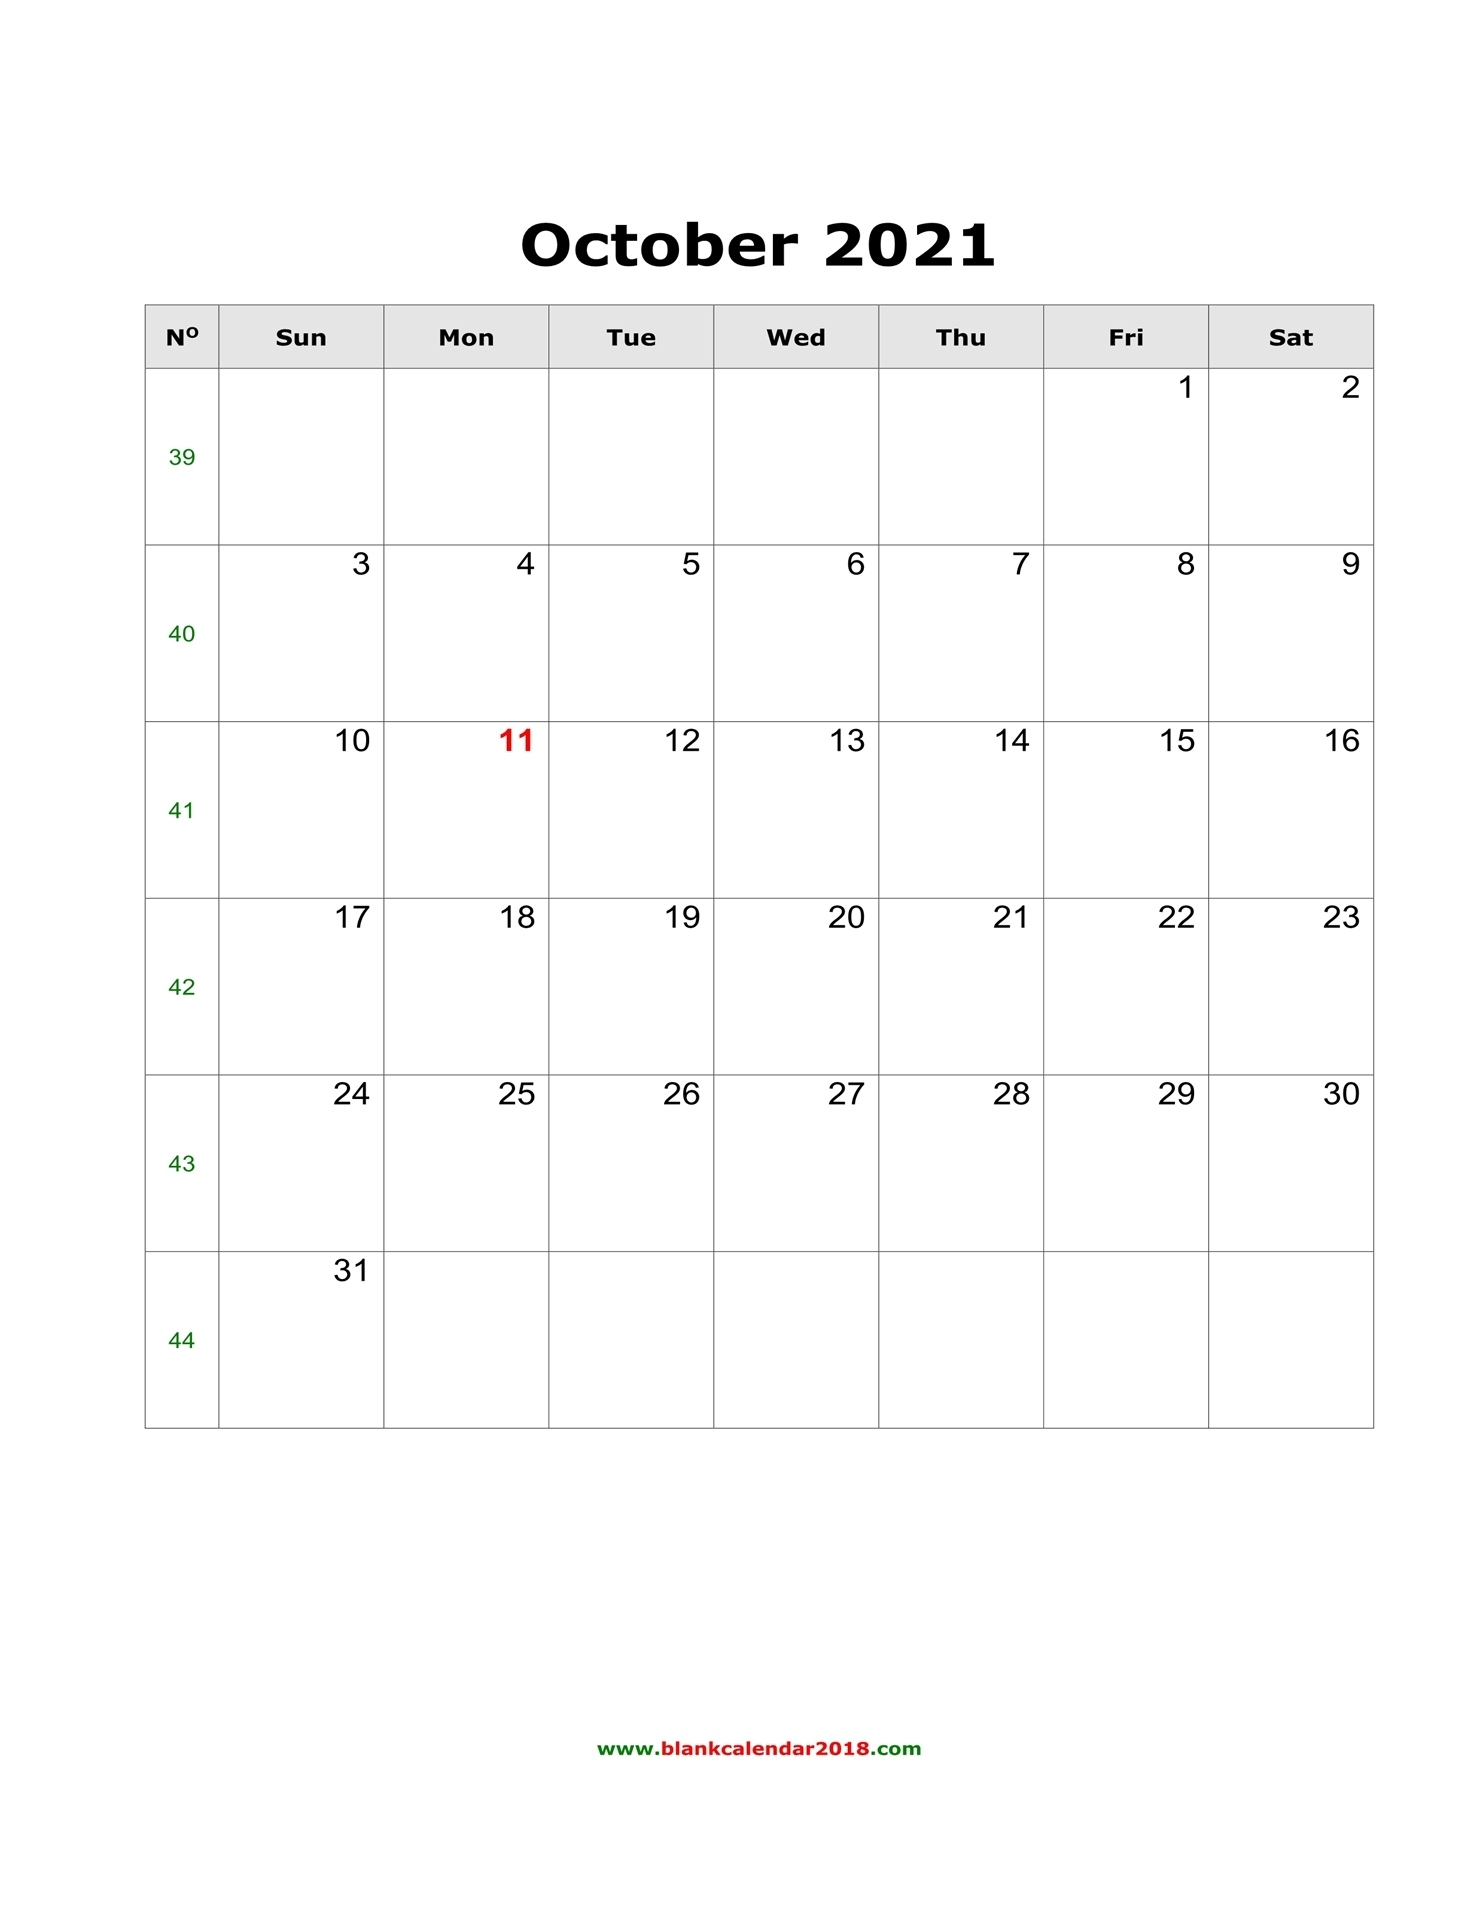 Blank Calendar For October 2021 October 2021 Blank Calendar